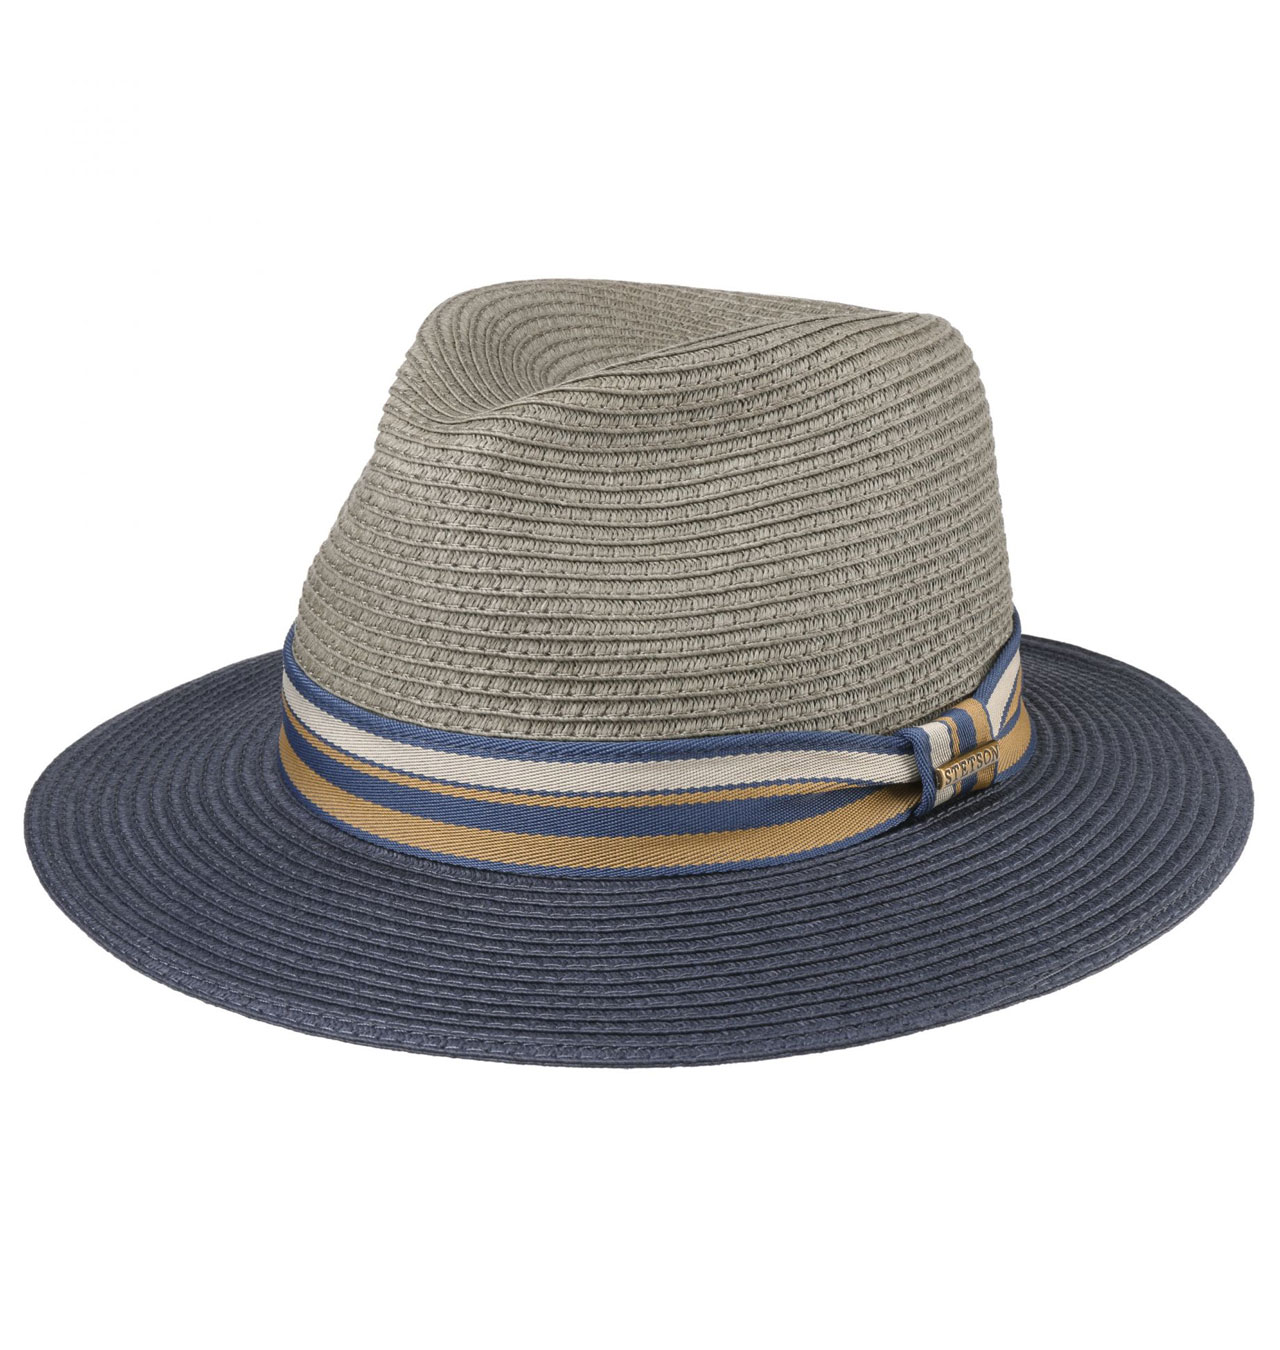 Stetson - Romaro Toyo Traveller Straw Hat - Grey